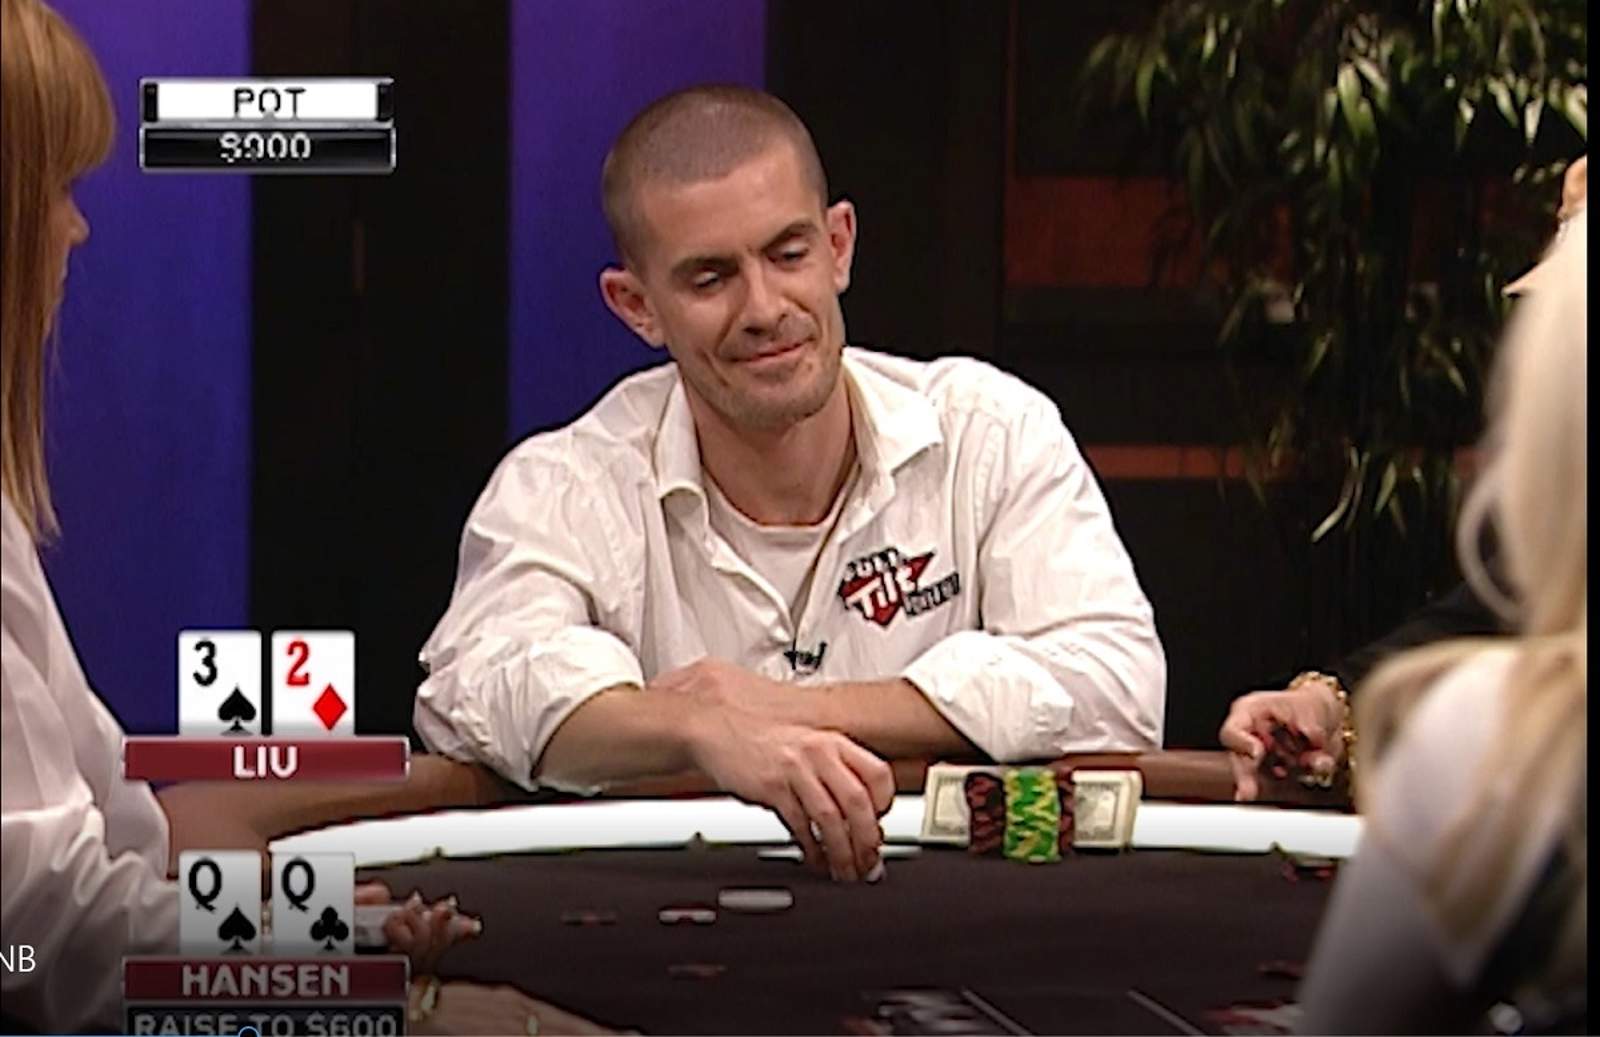 Poker After Dark: Gus Plays Against the Ladies